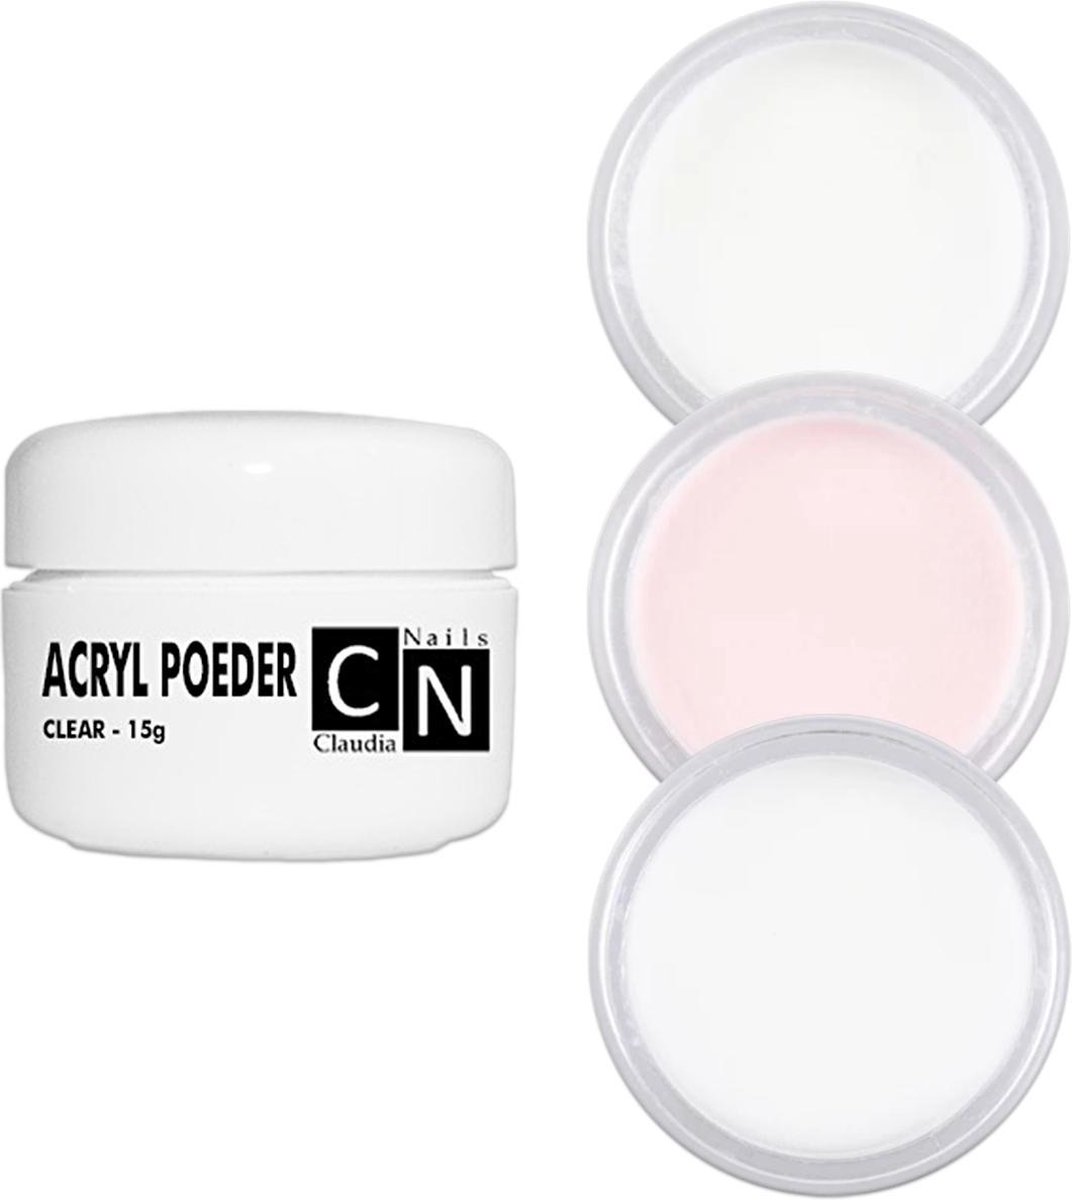 3-Delige Acryl Poeder Set /Acrylpoeder Nagels/Acrylpoeder/ Wit, Roze en Transparant